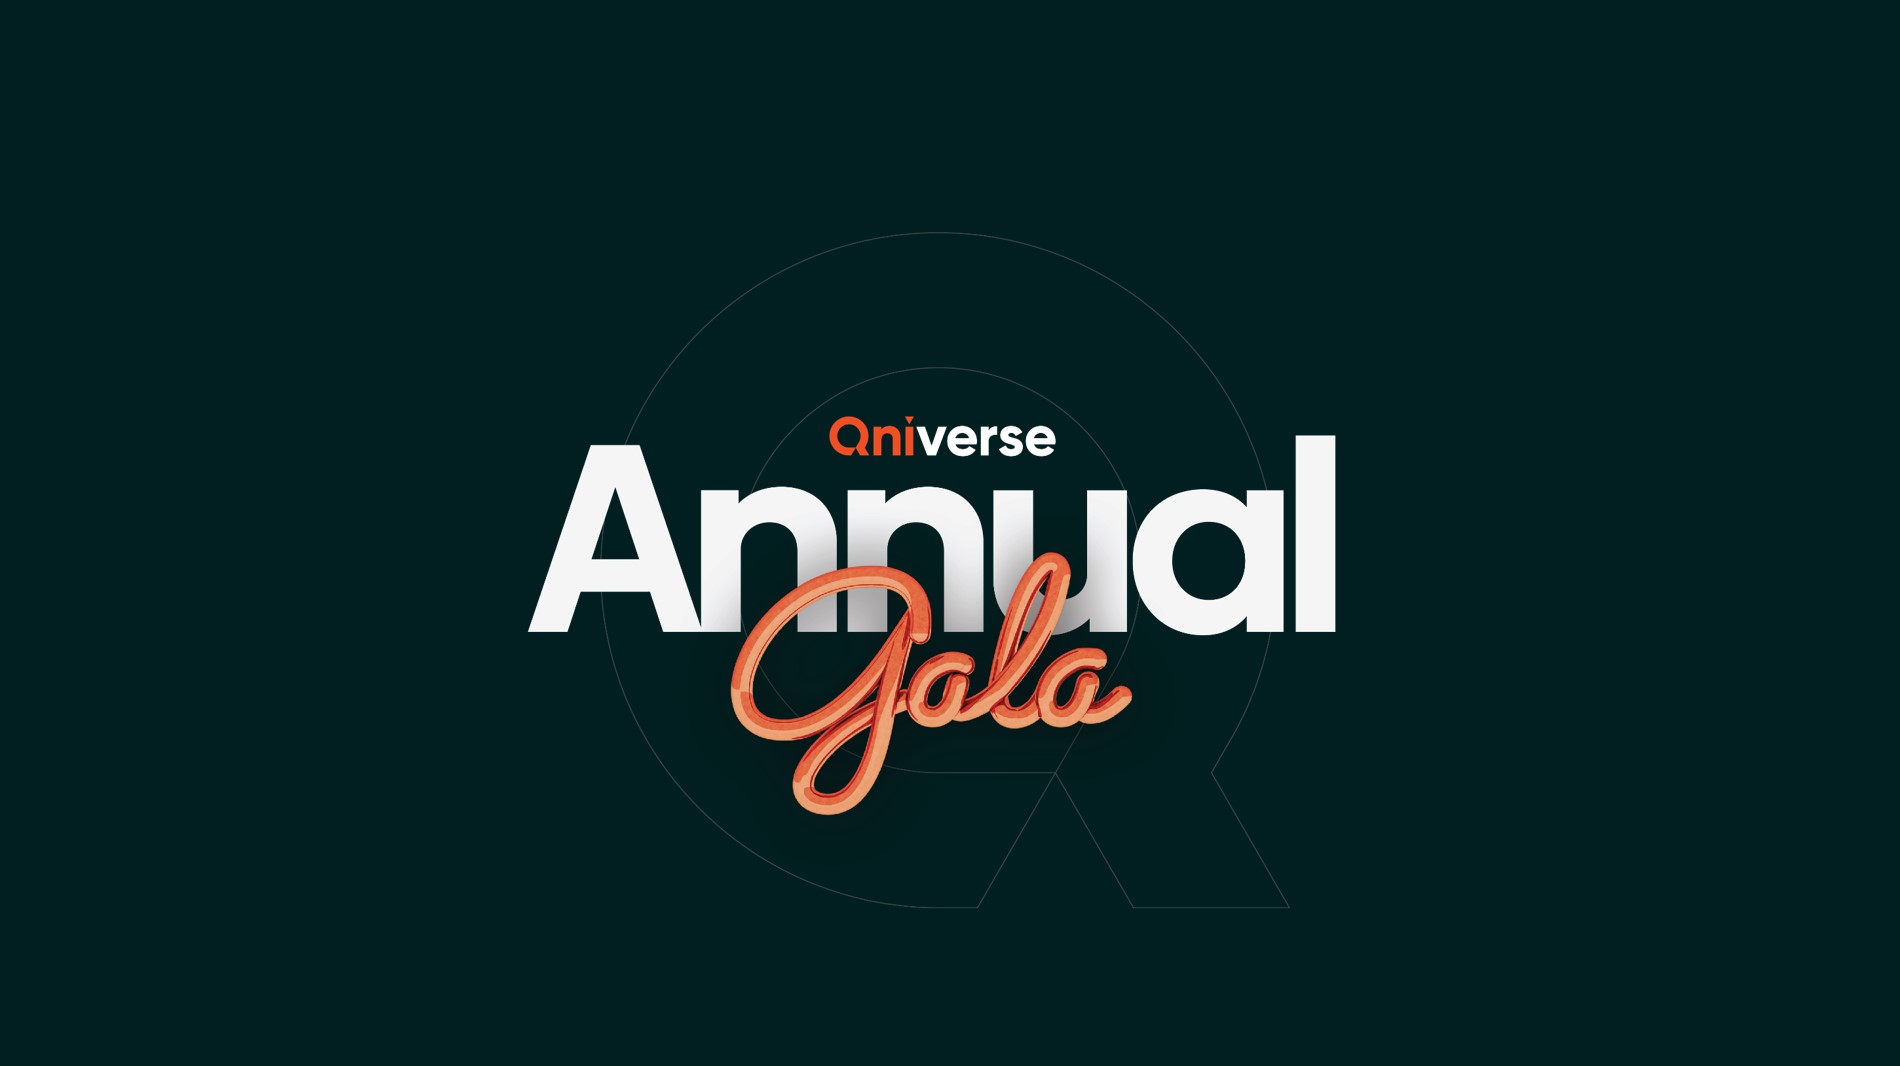 Qniverse Annual Gala - Celebrating 1st Anniversary